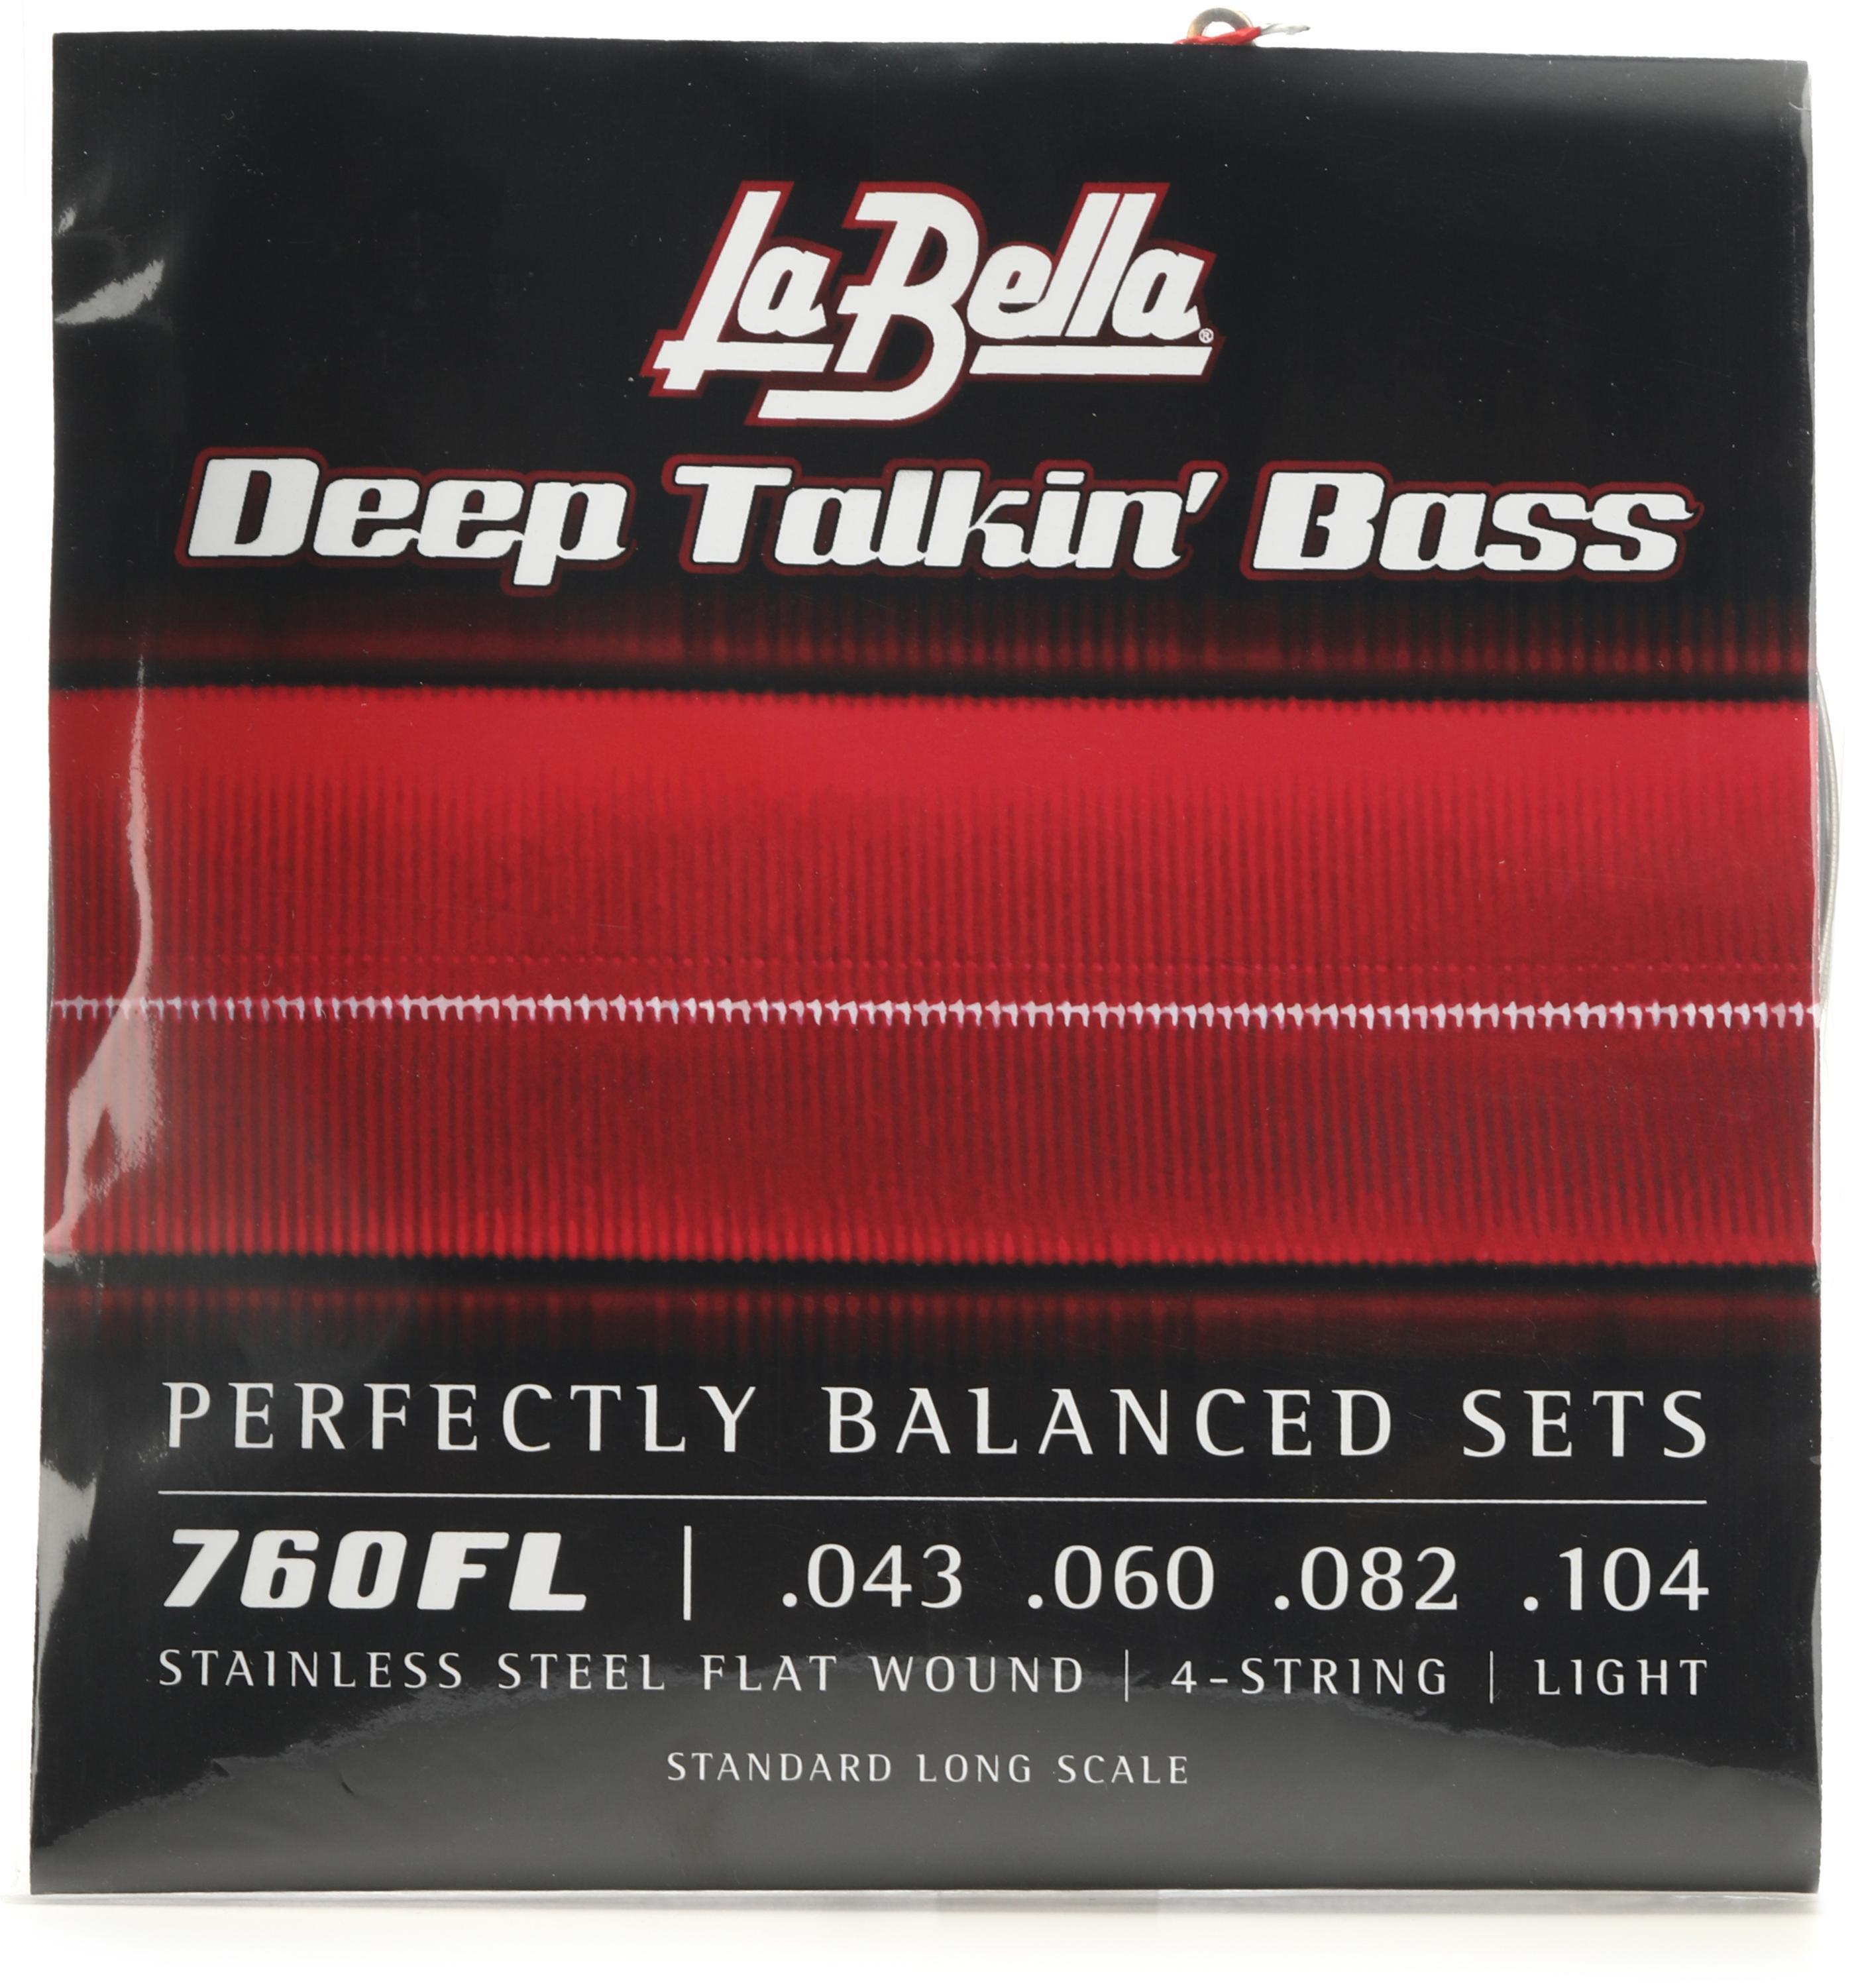 La Bella 760FL Deep Talkin' Bass Flatwound Bass Guitar Strings - .043-.104  Light